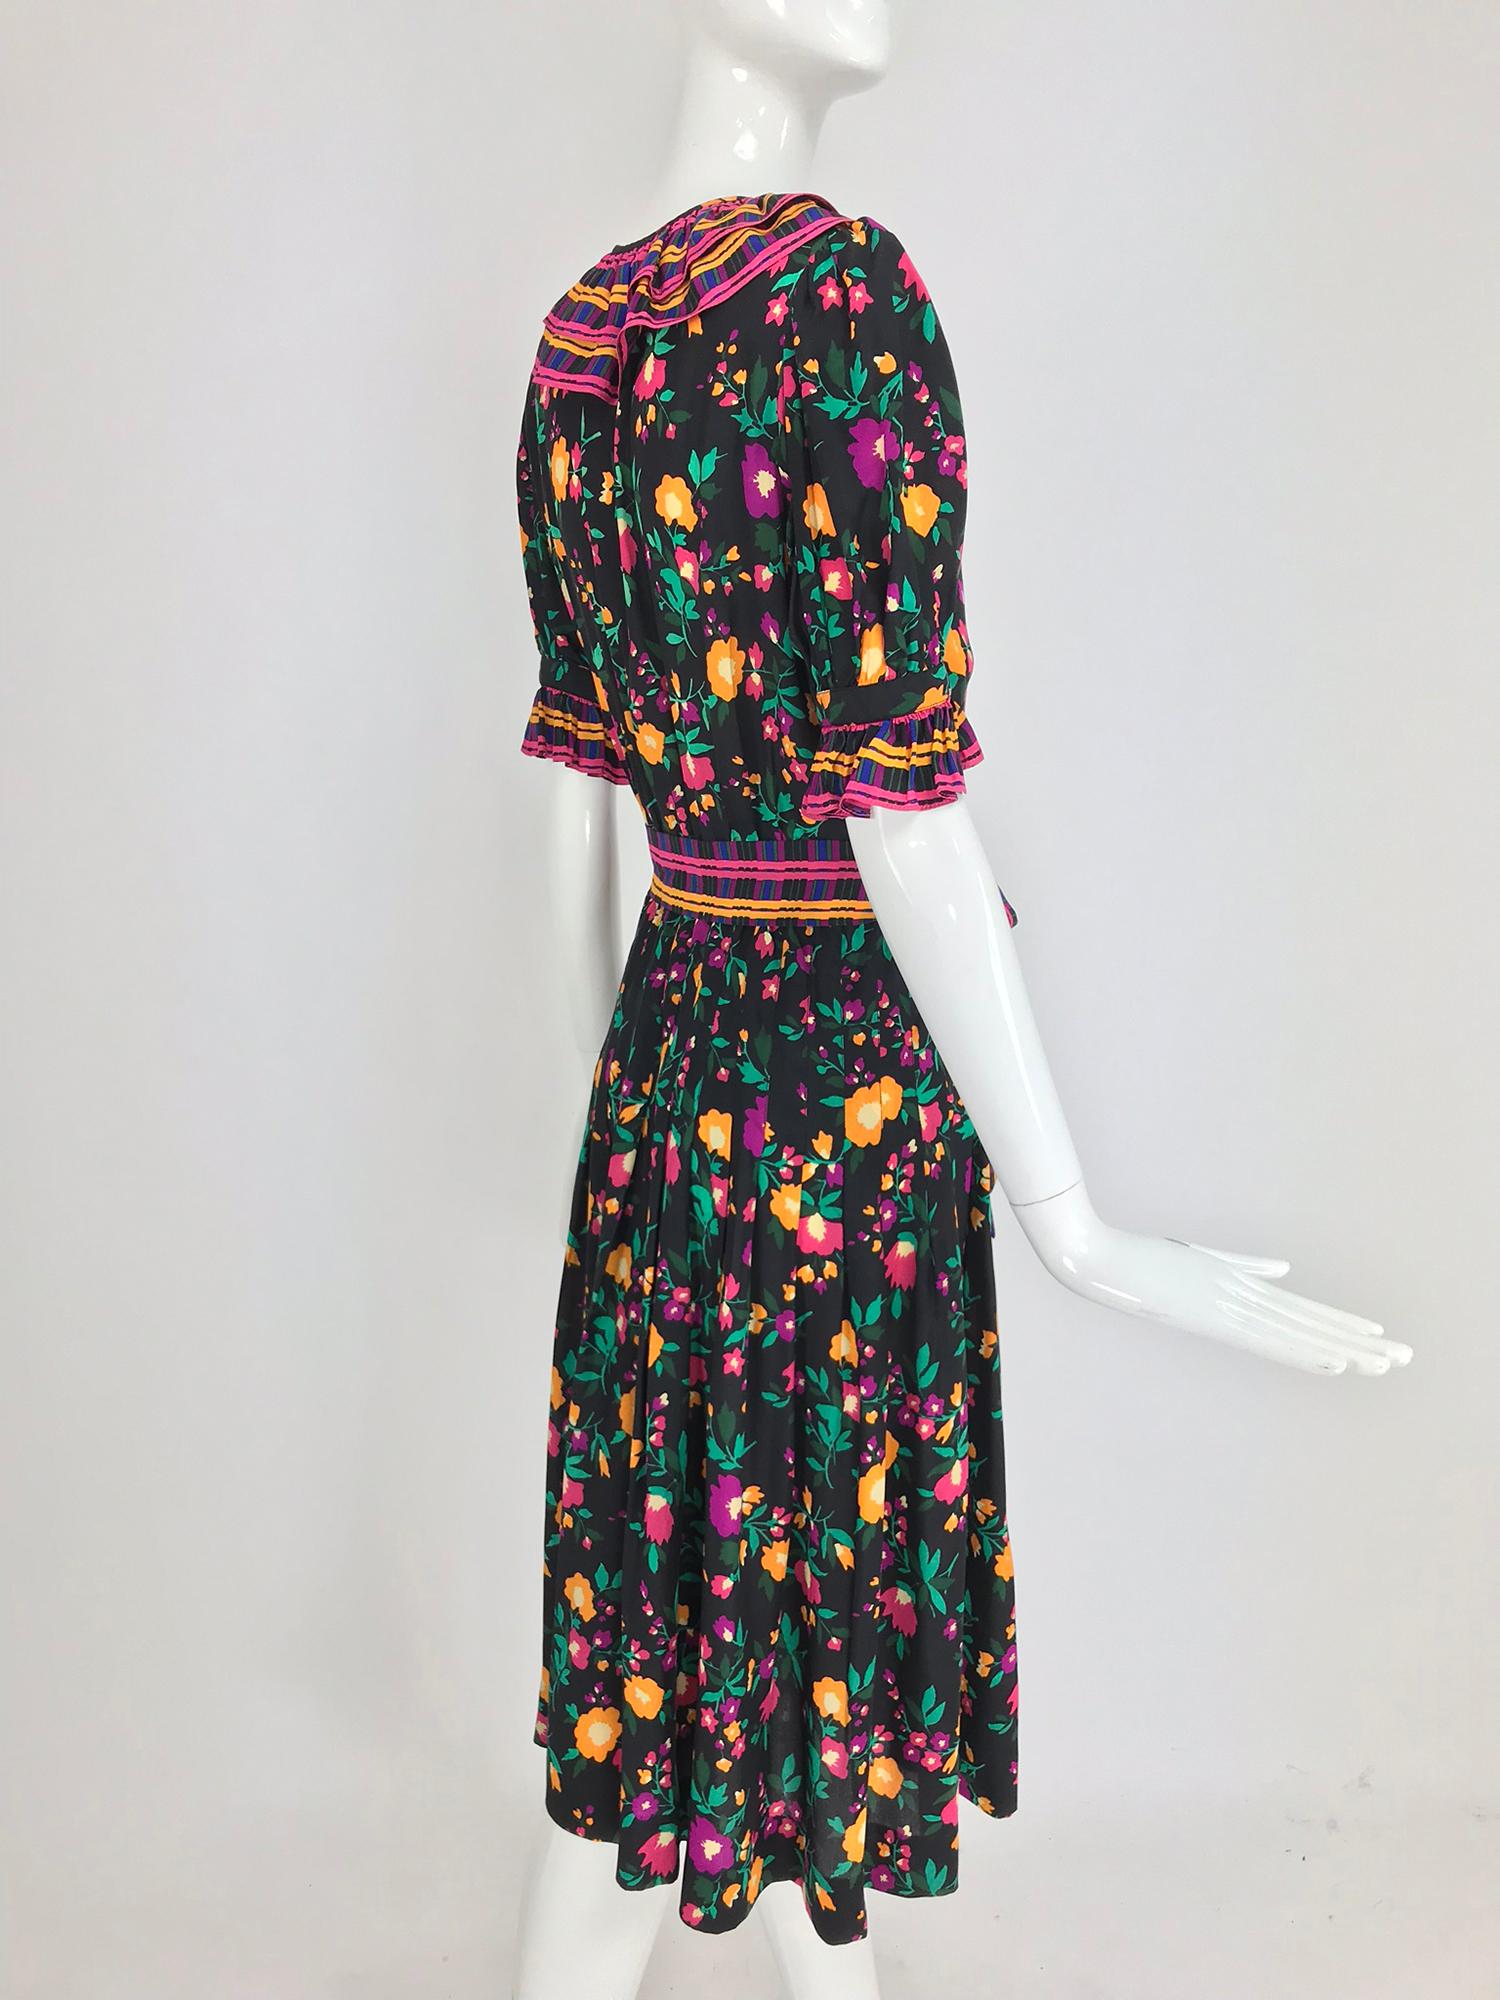 Yves Saint Laurent Rive Gauche floral silk mix print dress 1970s 4